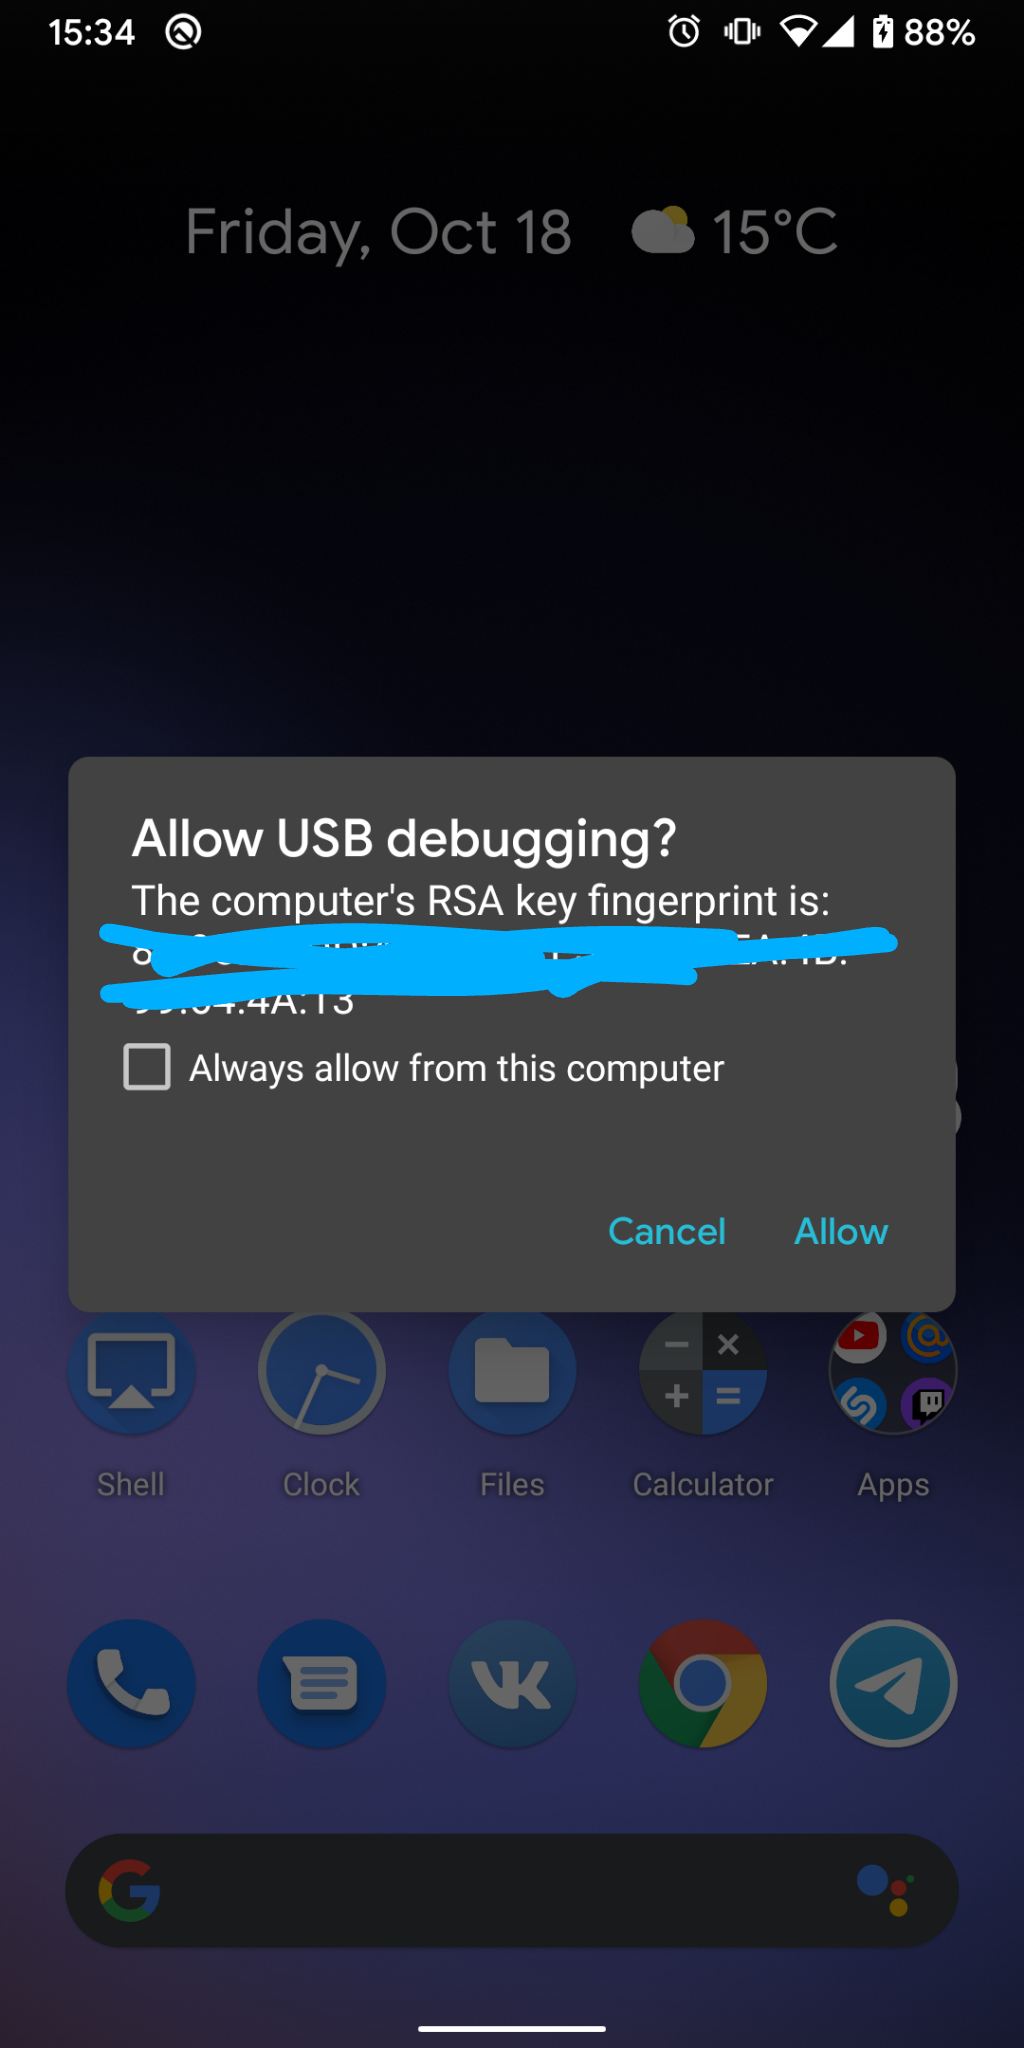 Allow USB debugging?